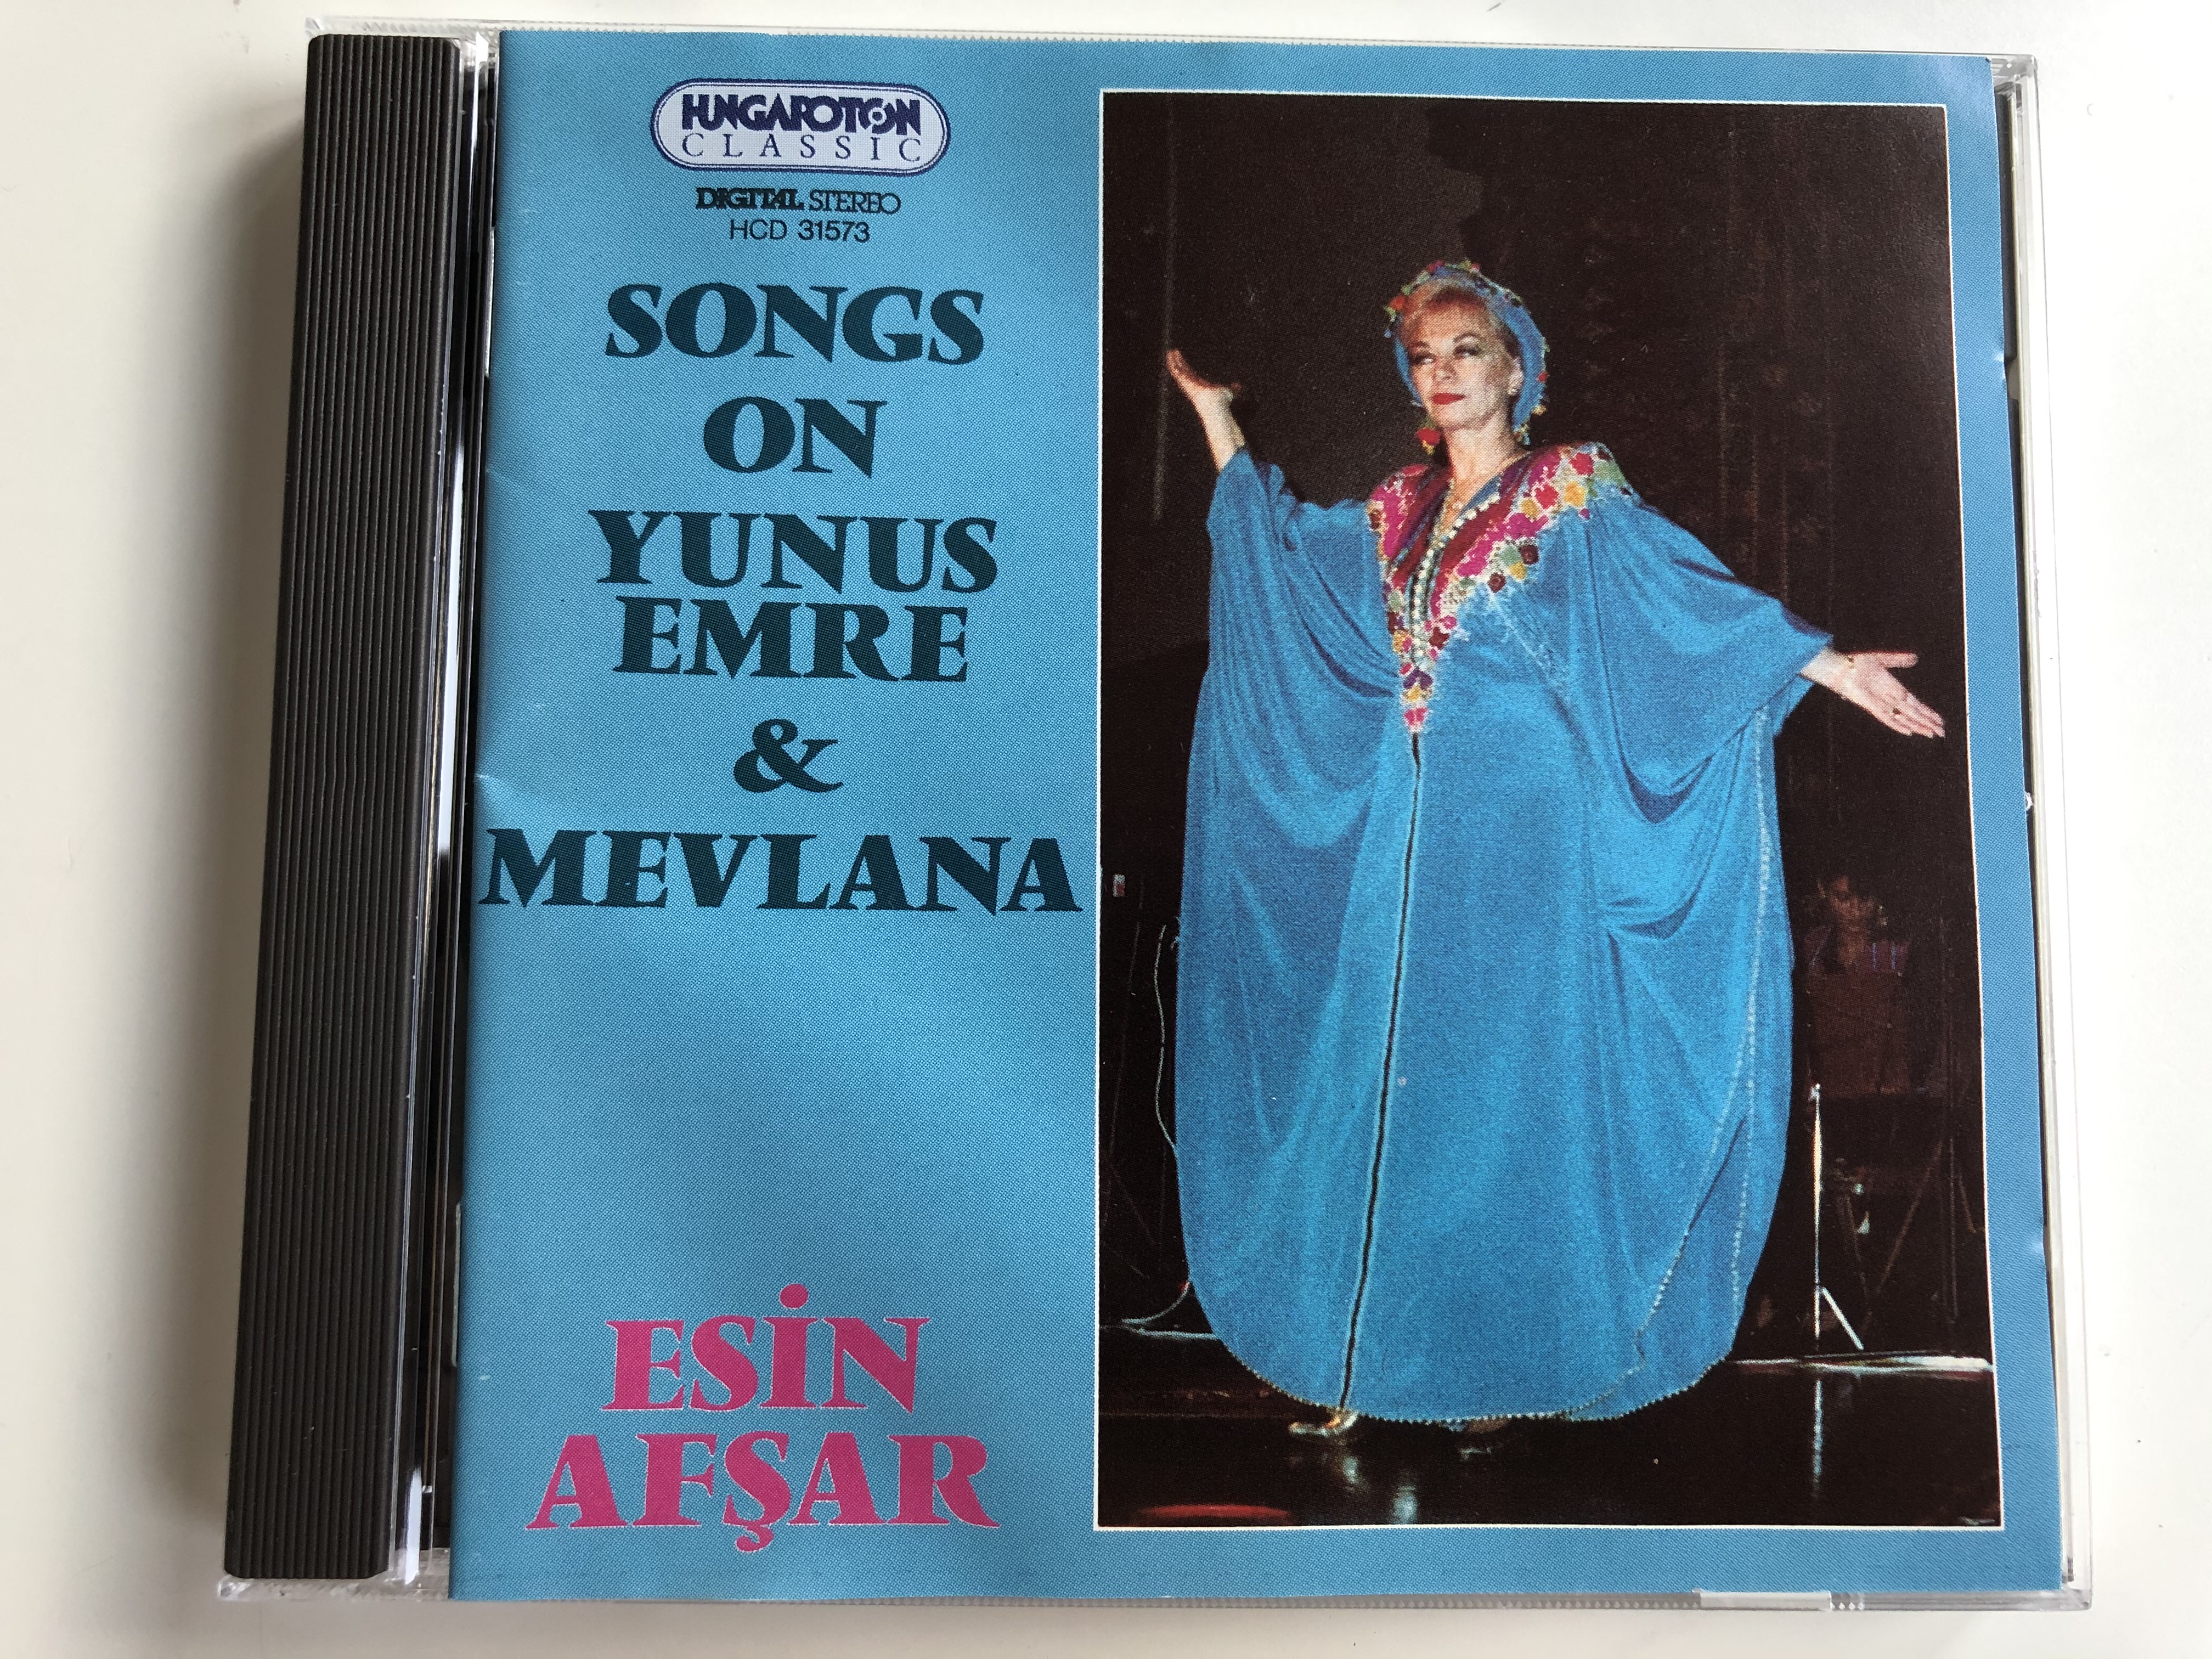 songs-on-yunus-emre-mevlana-esin-afsar-hungaroton-classic-audio-cd-1994-stereo-hcd-31573-1-.jpg